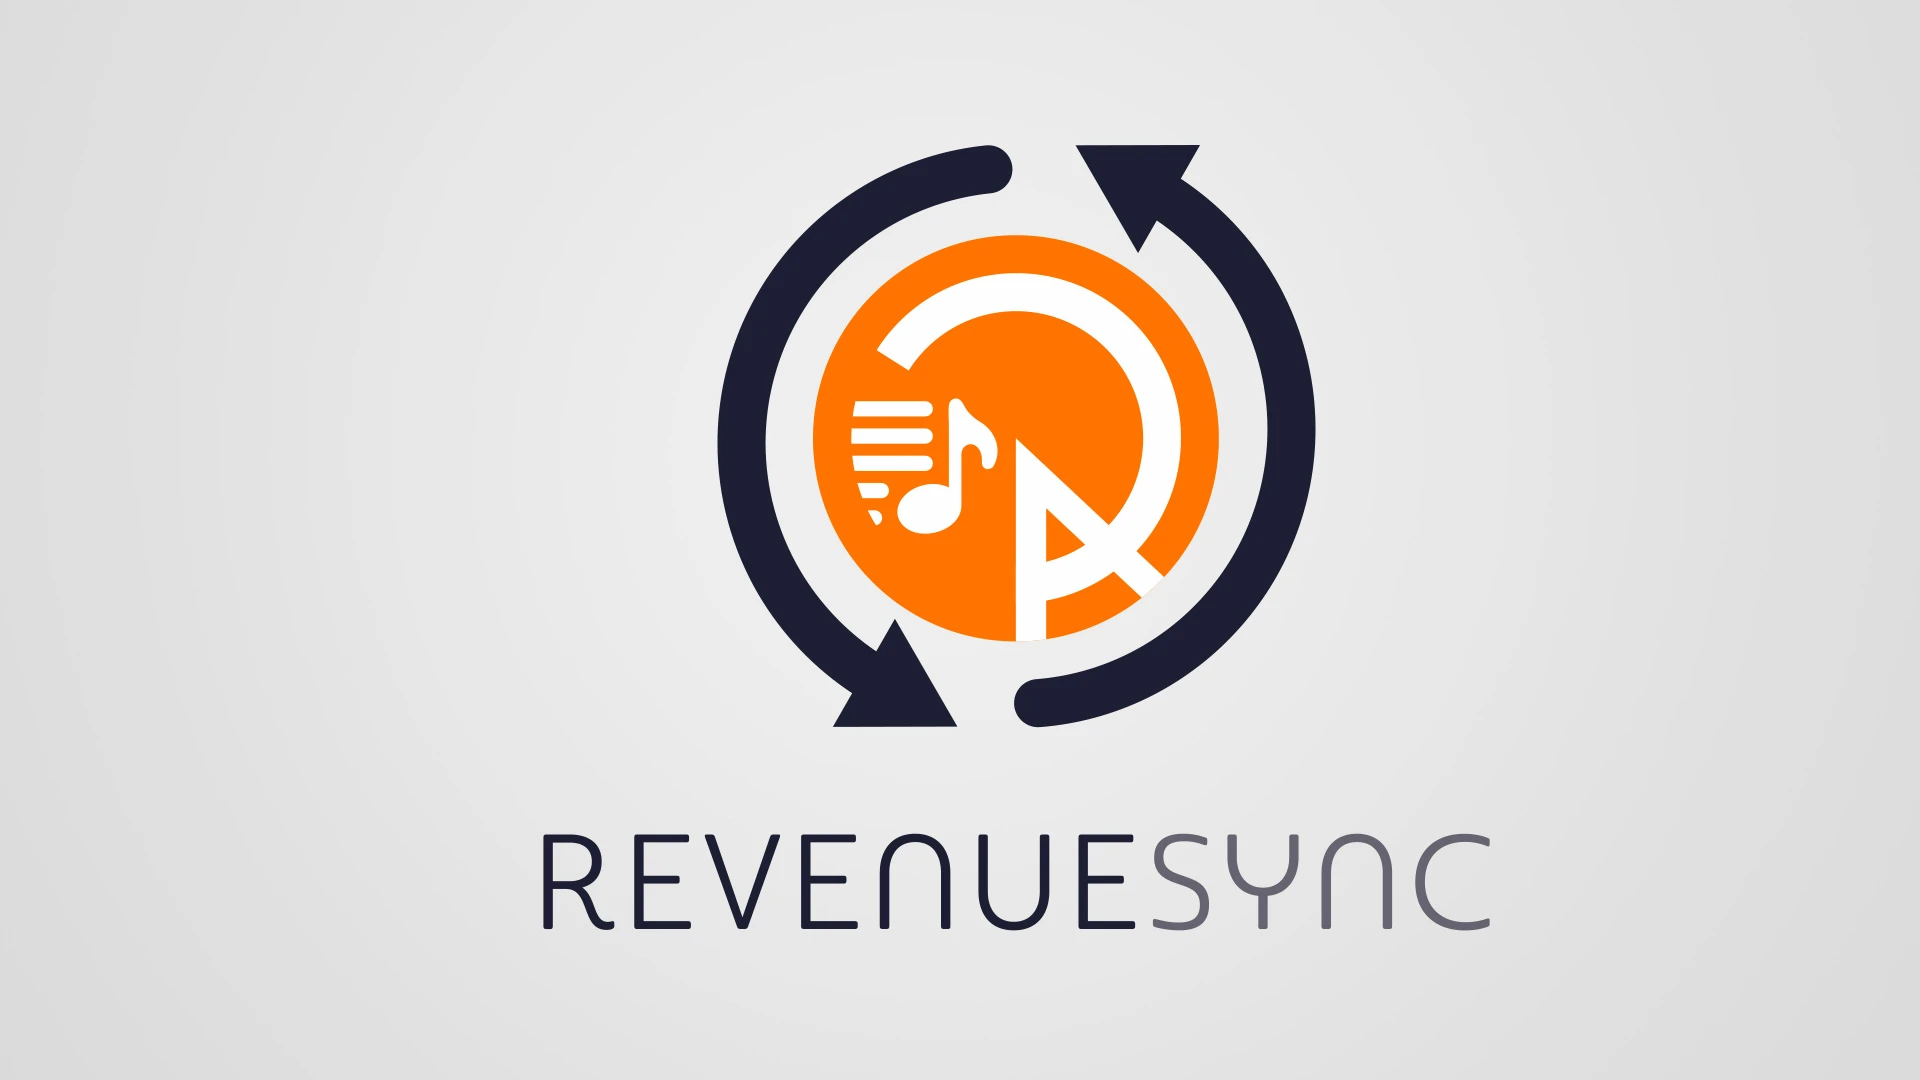 RevenueSync Logo Design & Branding